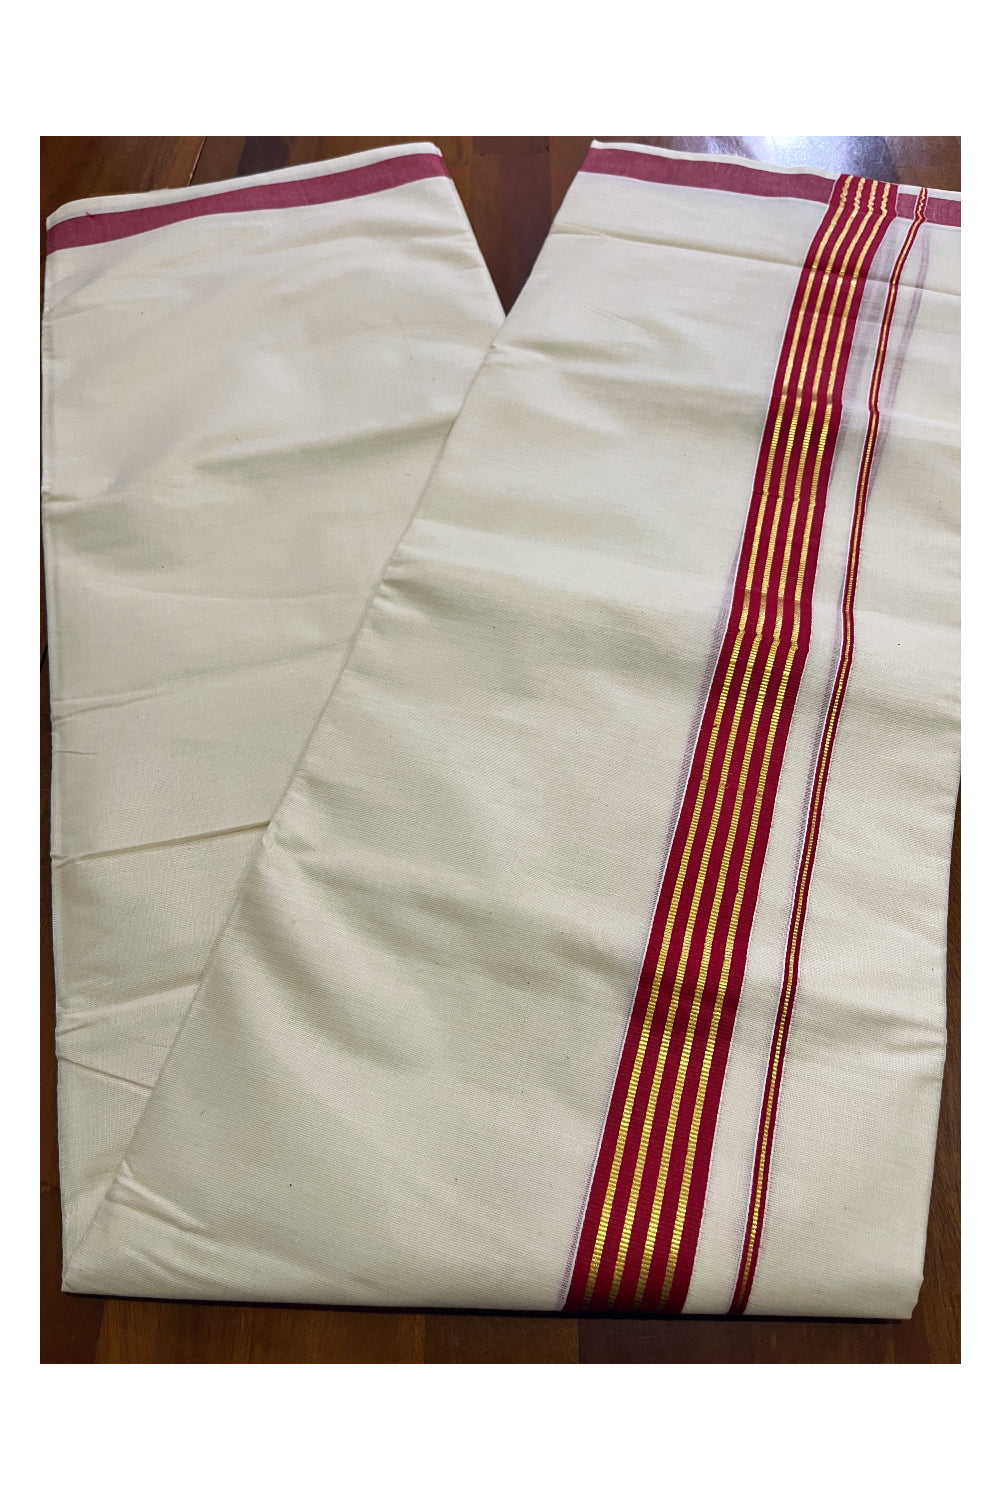 Off White Kerala Cotton Double Mundu with Kasavu and Maroon Border (South Indian Kerala Dhoti)